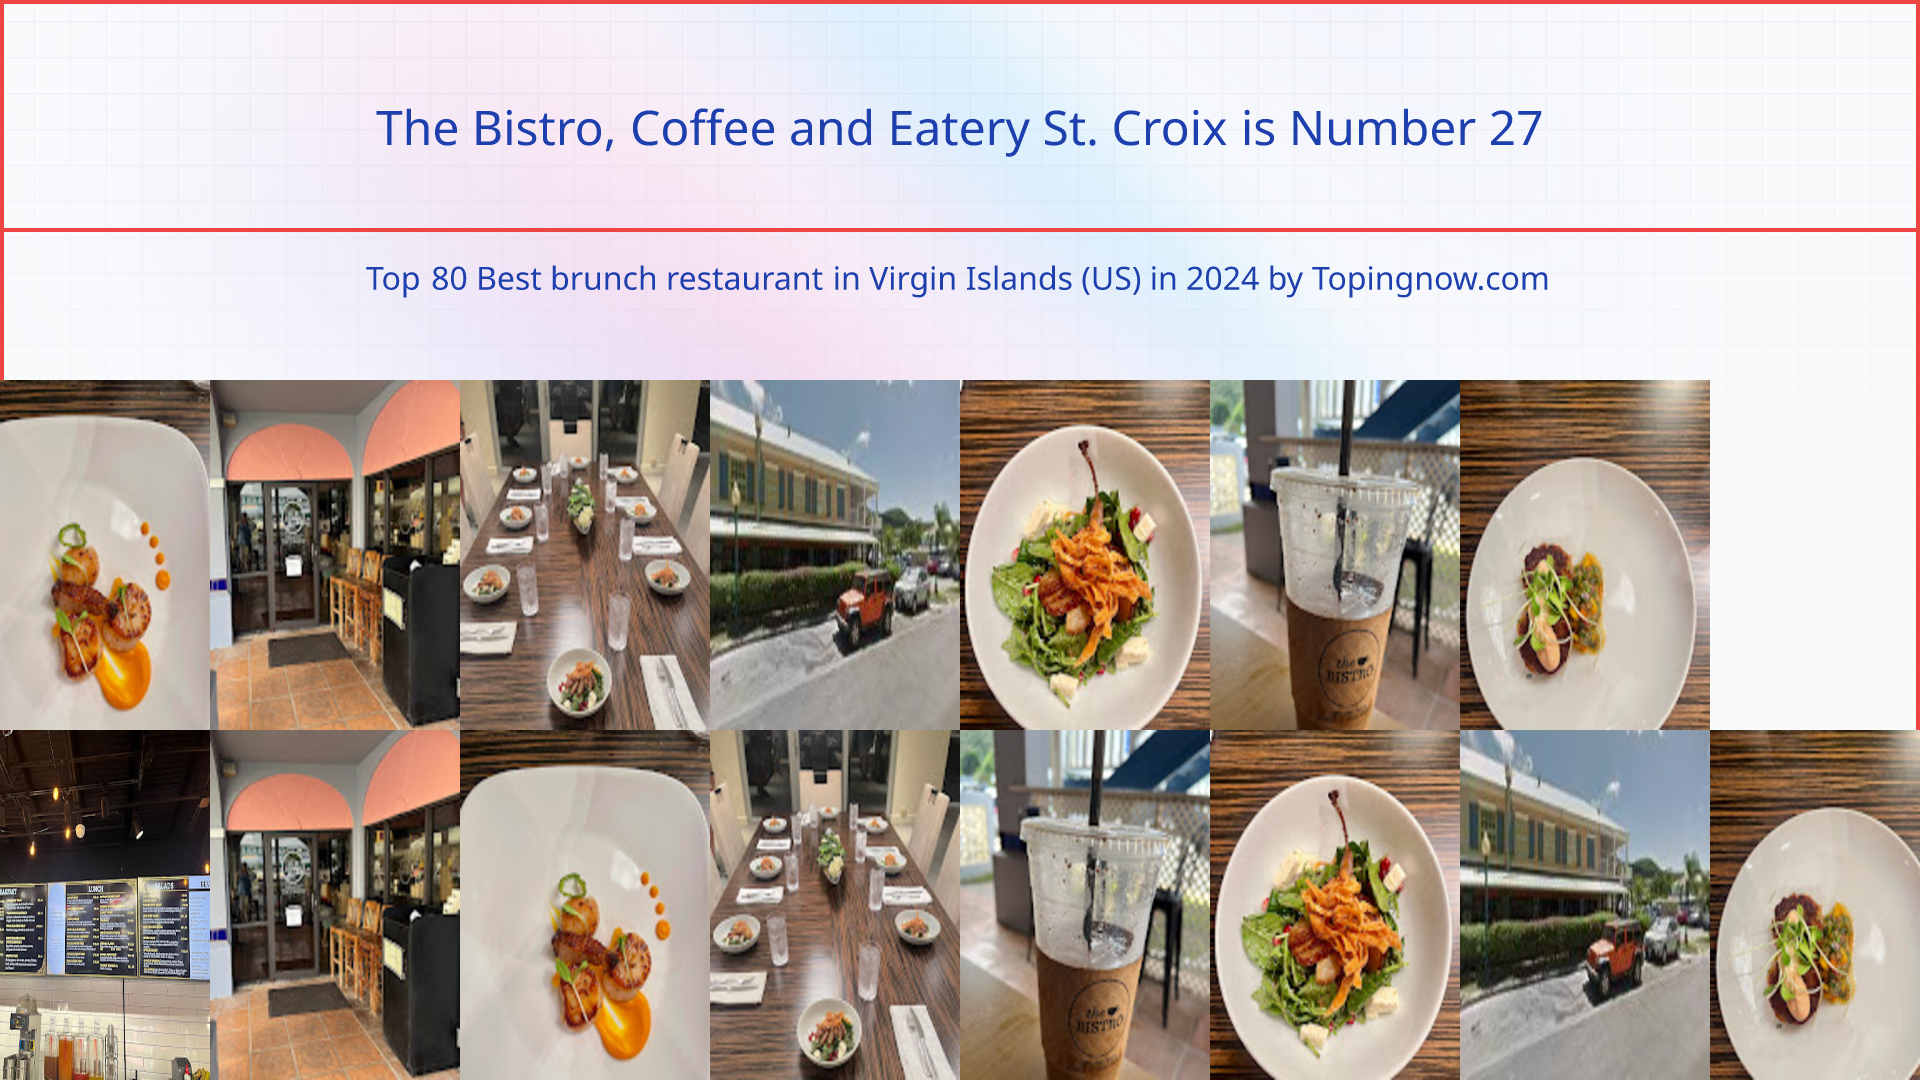 The Bistro, Coffee and Eatery St. Croix: Top 80 Best brunch restaurant in Virgin Islands (US) in 2024